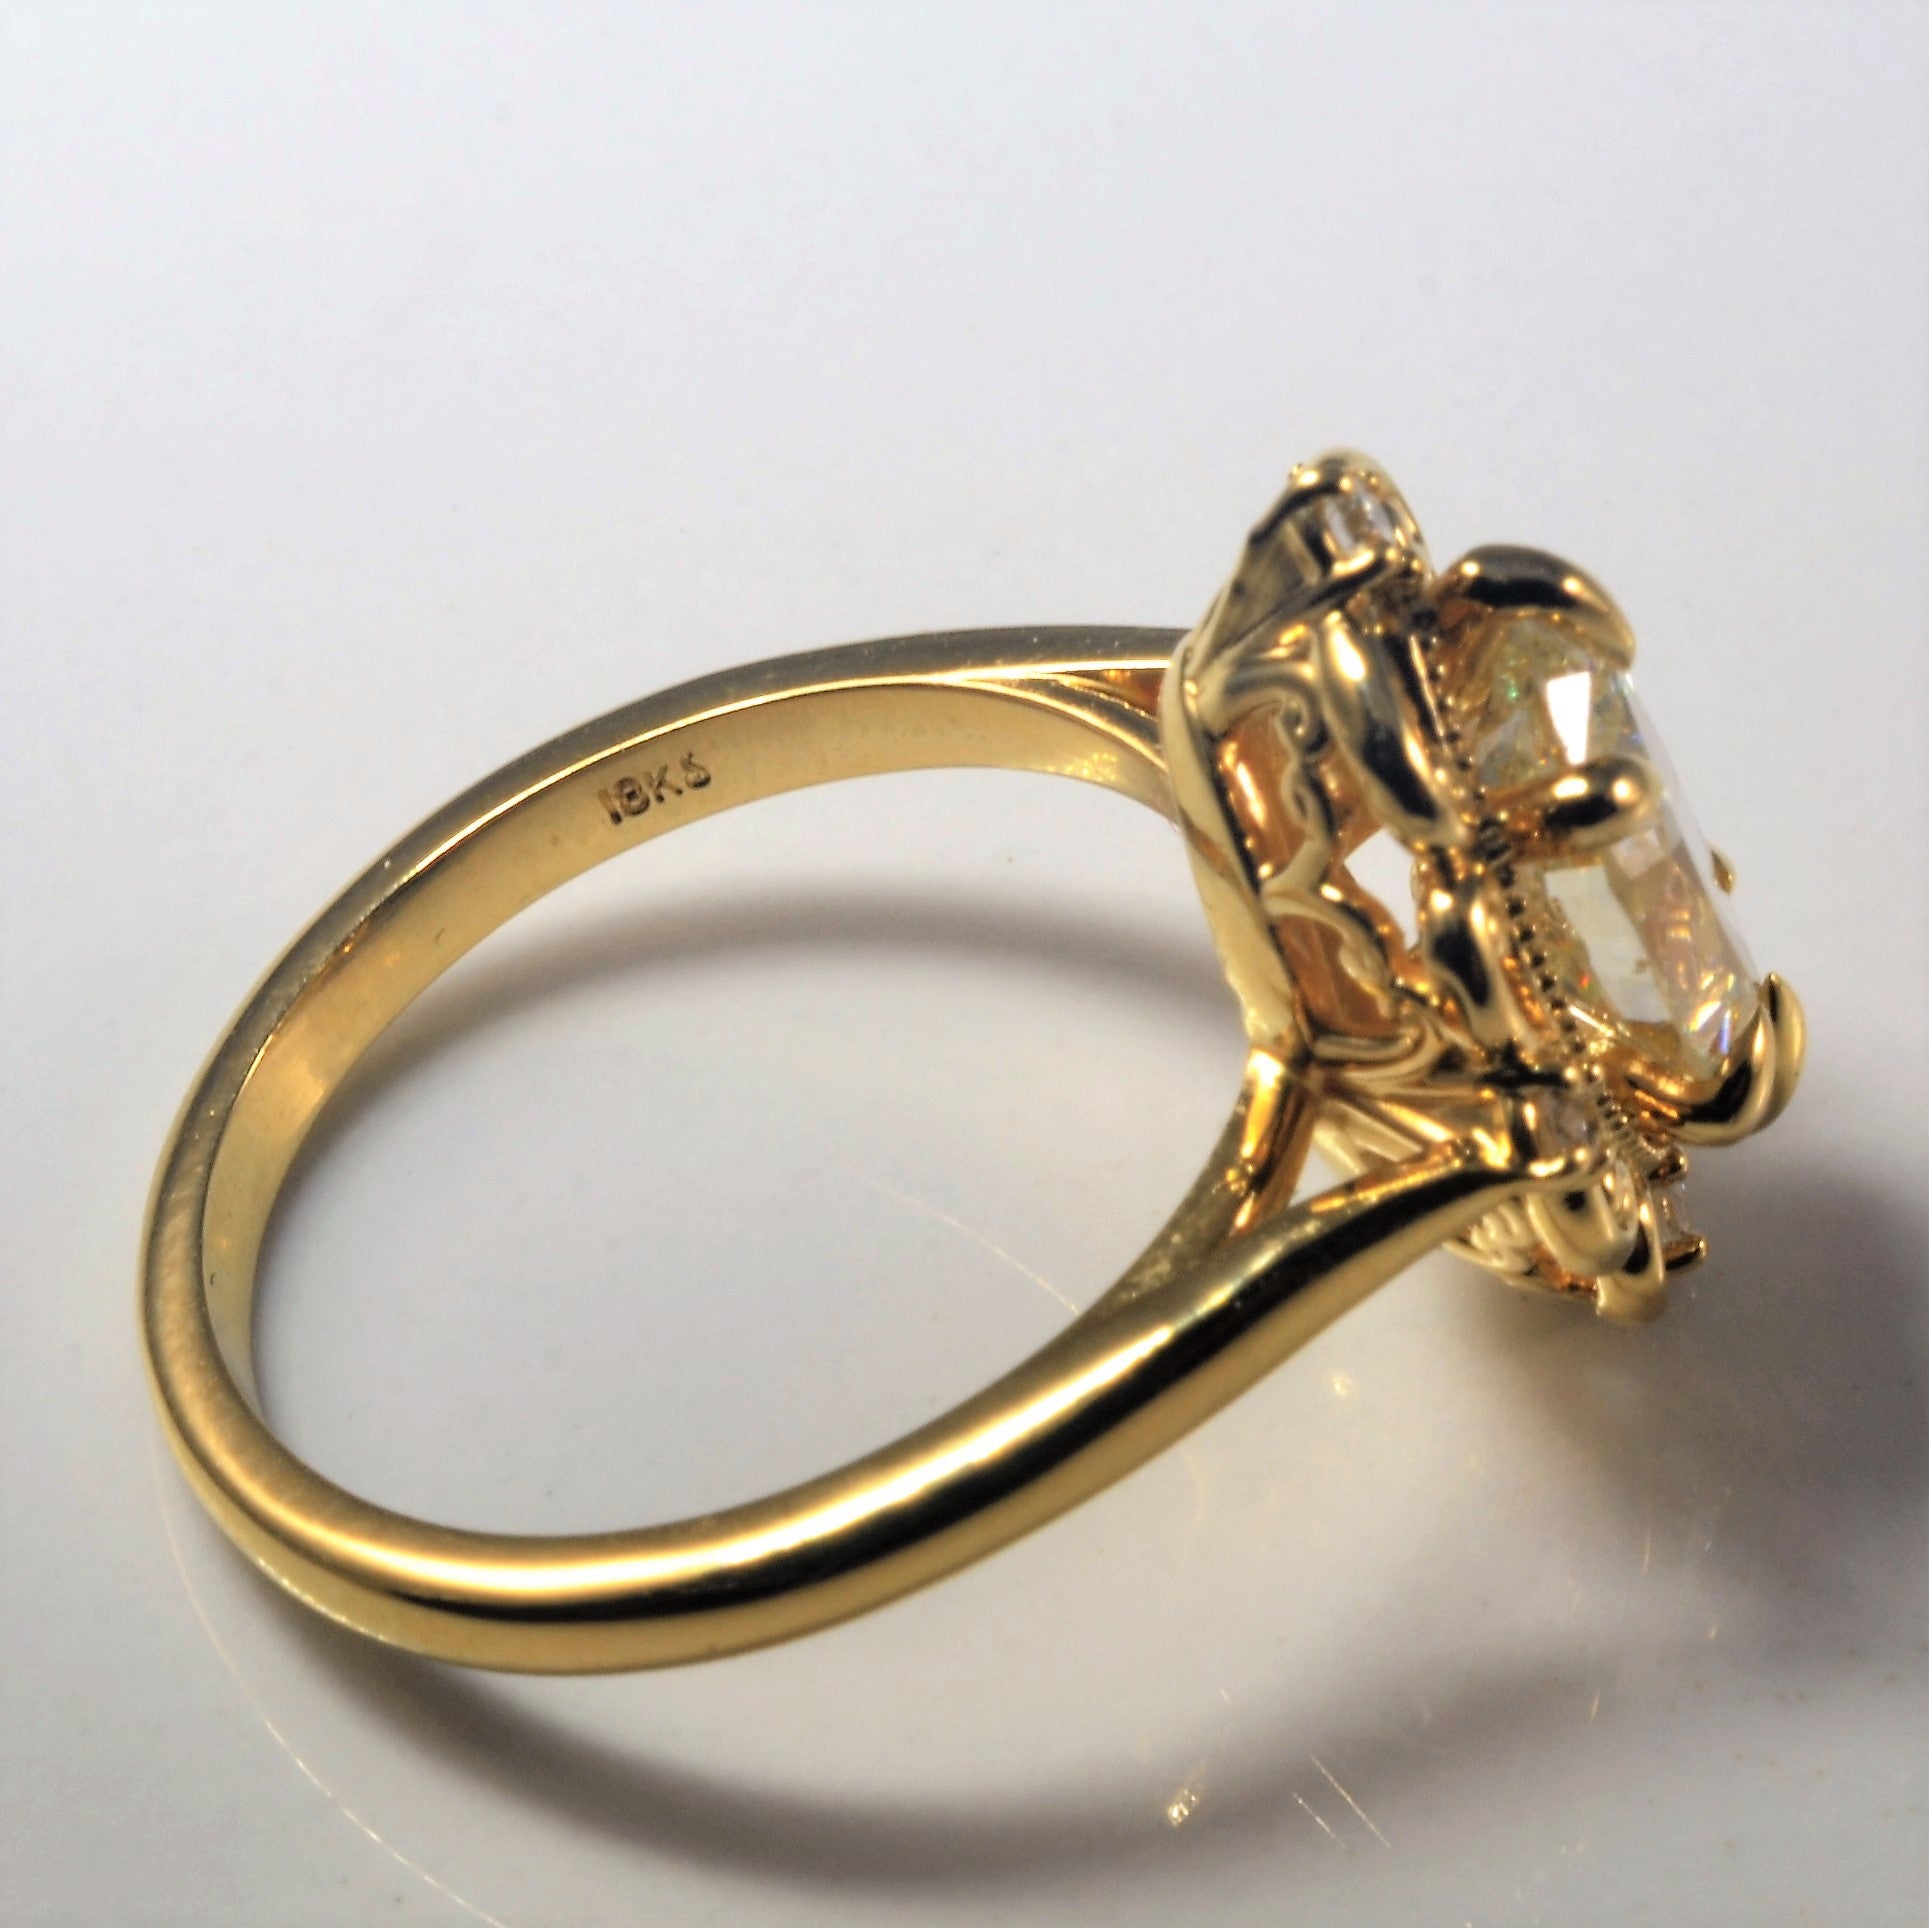 'Bespoke' Ornate Filigree Marquise Diamond Ring | 1.71ctw | SZ 7 |